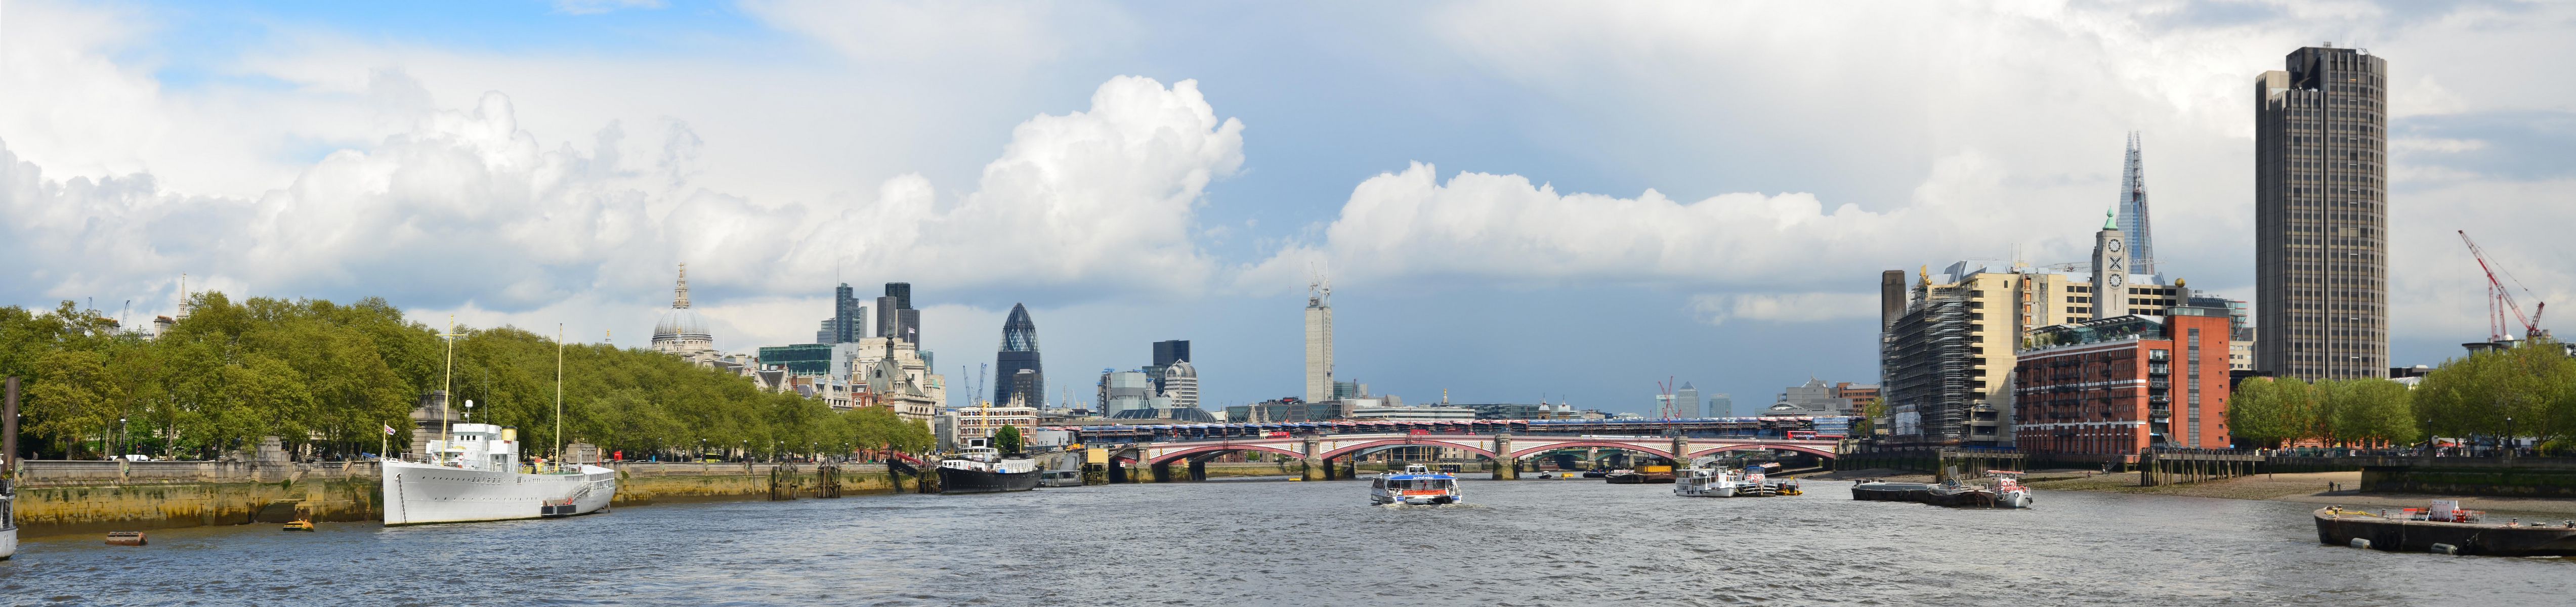 The Thames - London.jpg